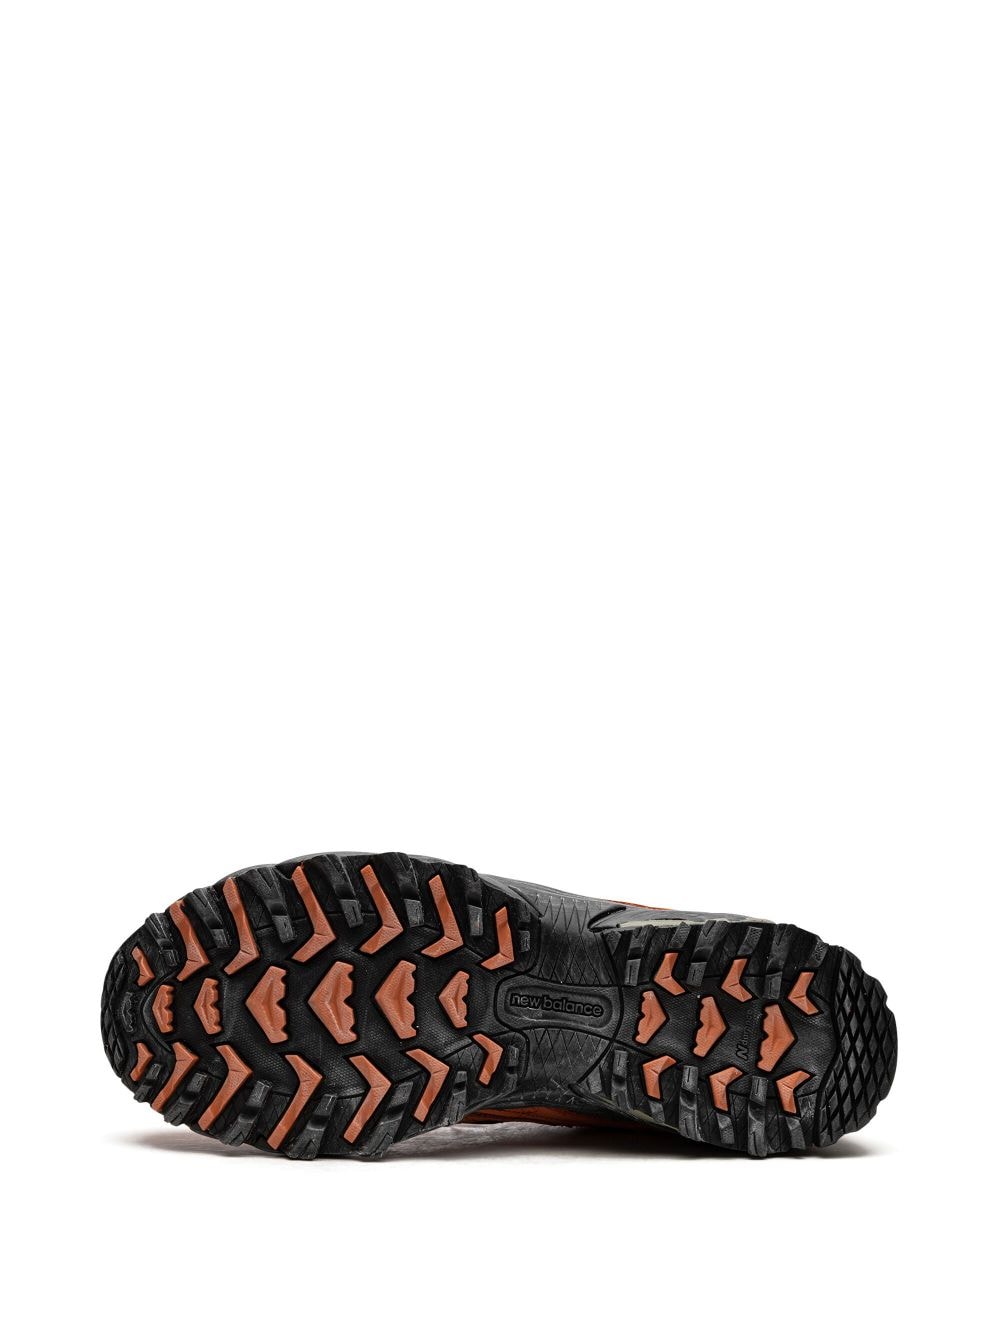 Shop New Balance X Joe Fresh Goods Beneath The Surface "orange/green" Sneakers